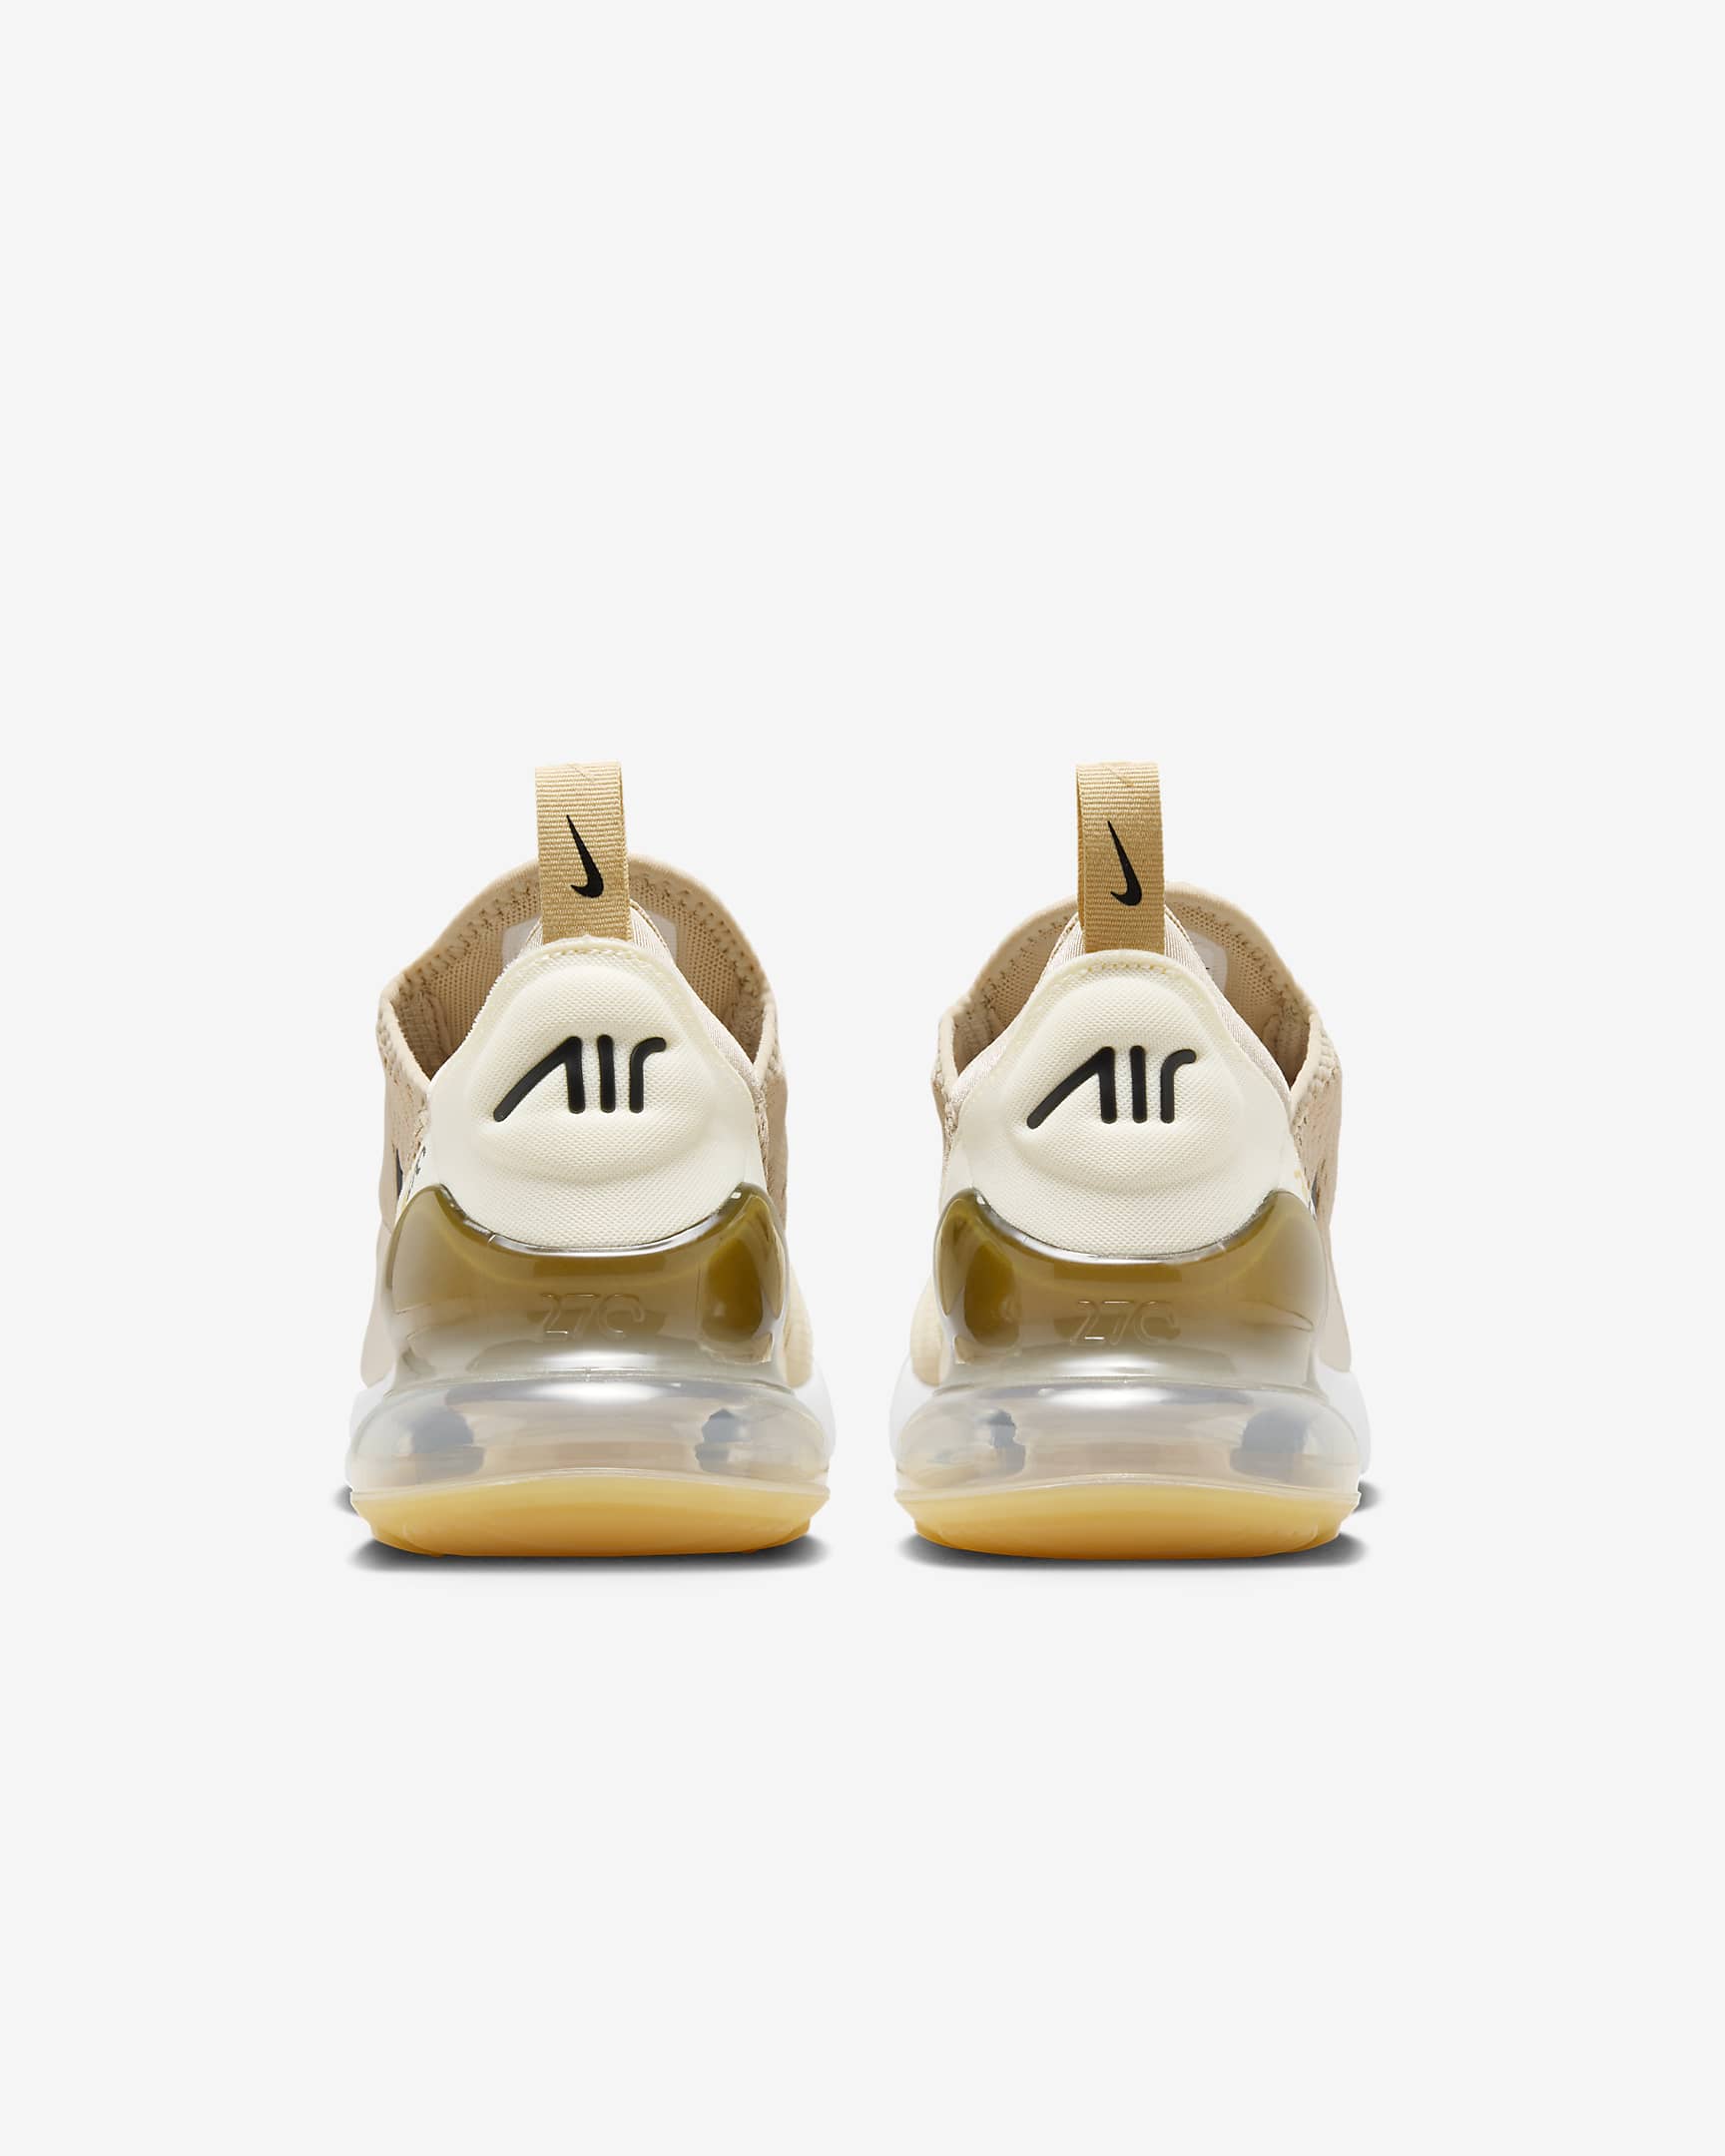 Nike Air Max 270 Women's Shoes - Team Gold/Saturn Gold/Metallic Gold/Black